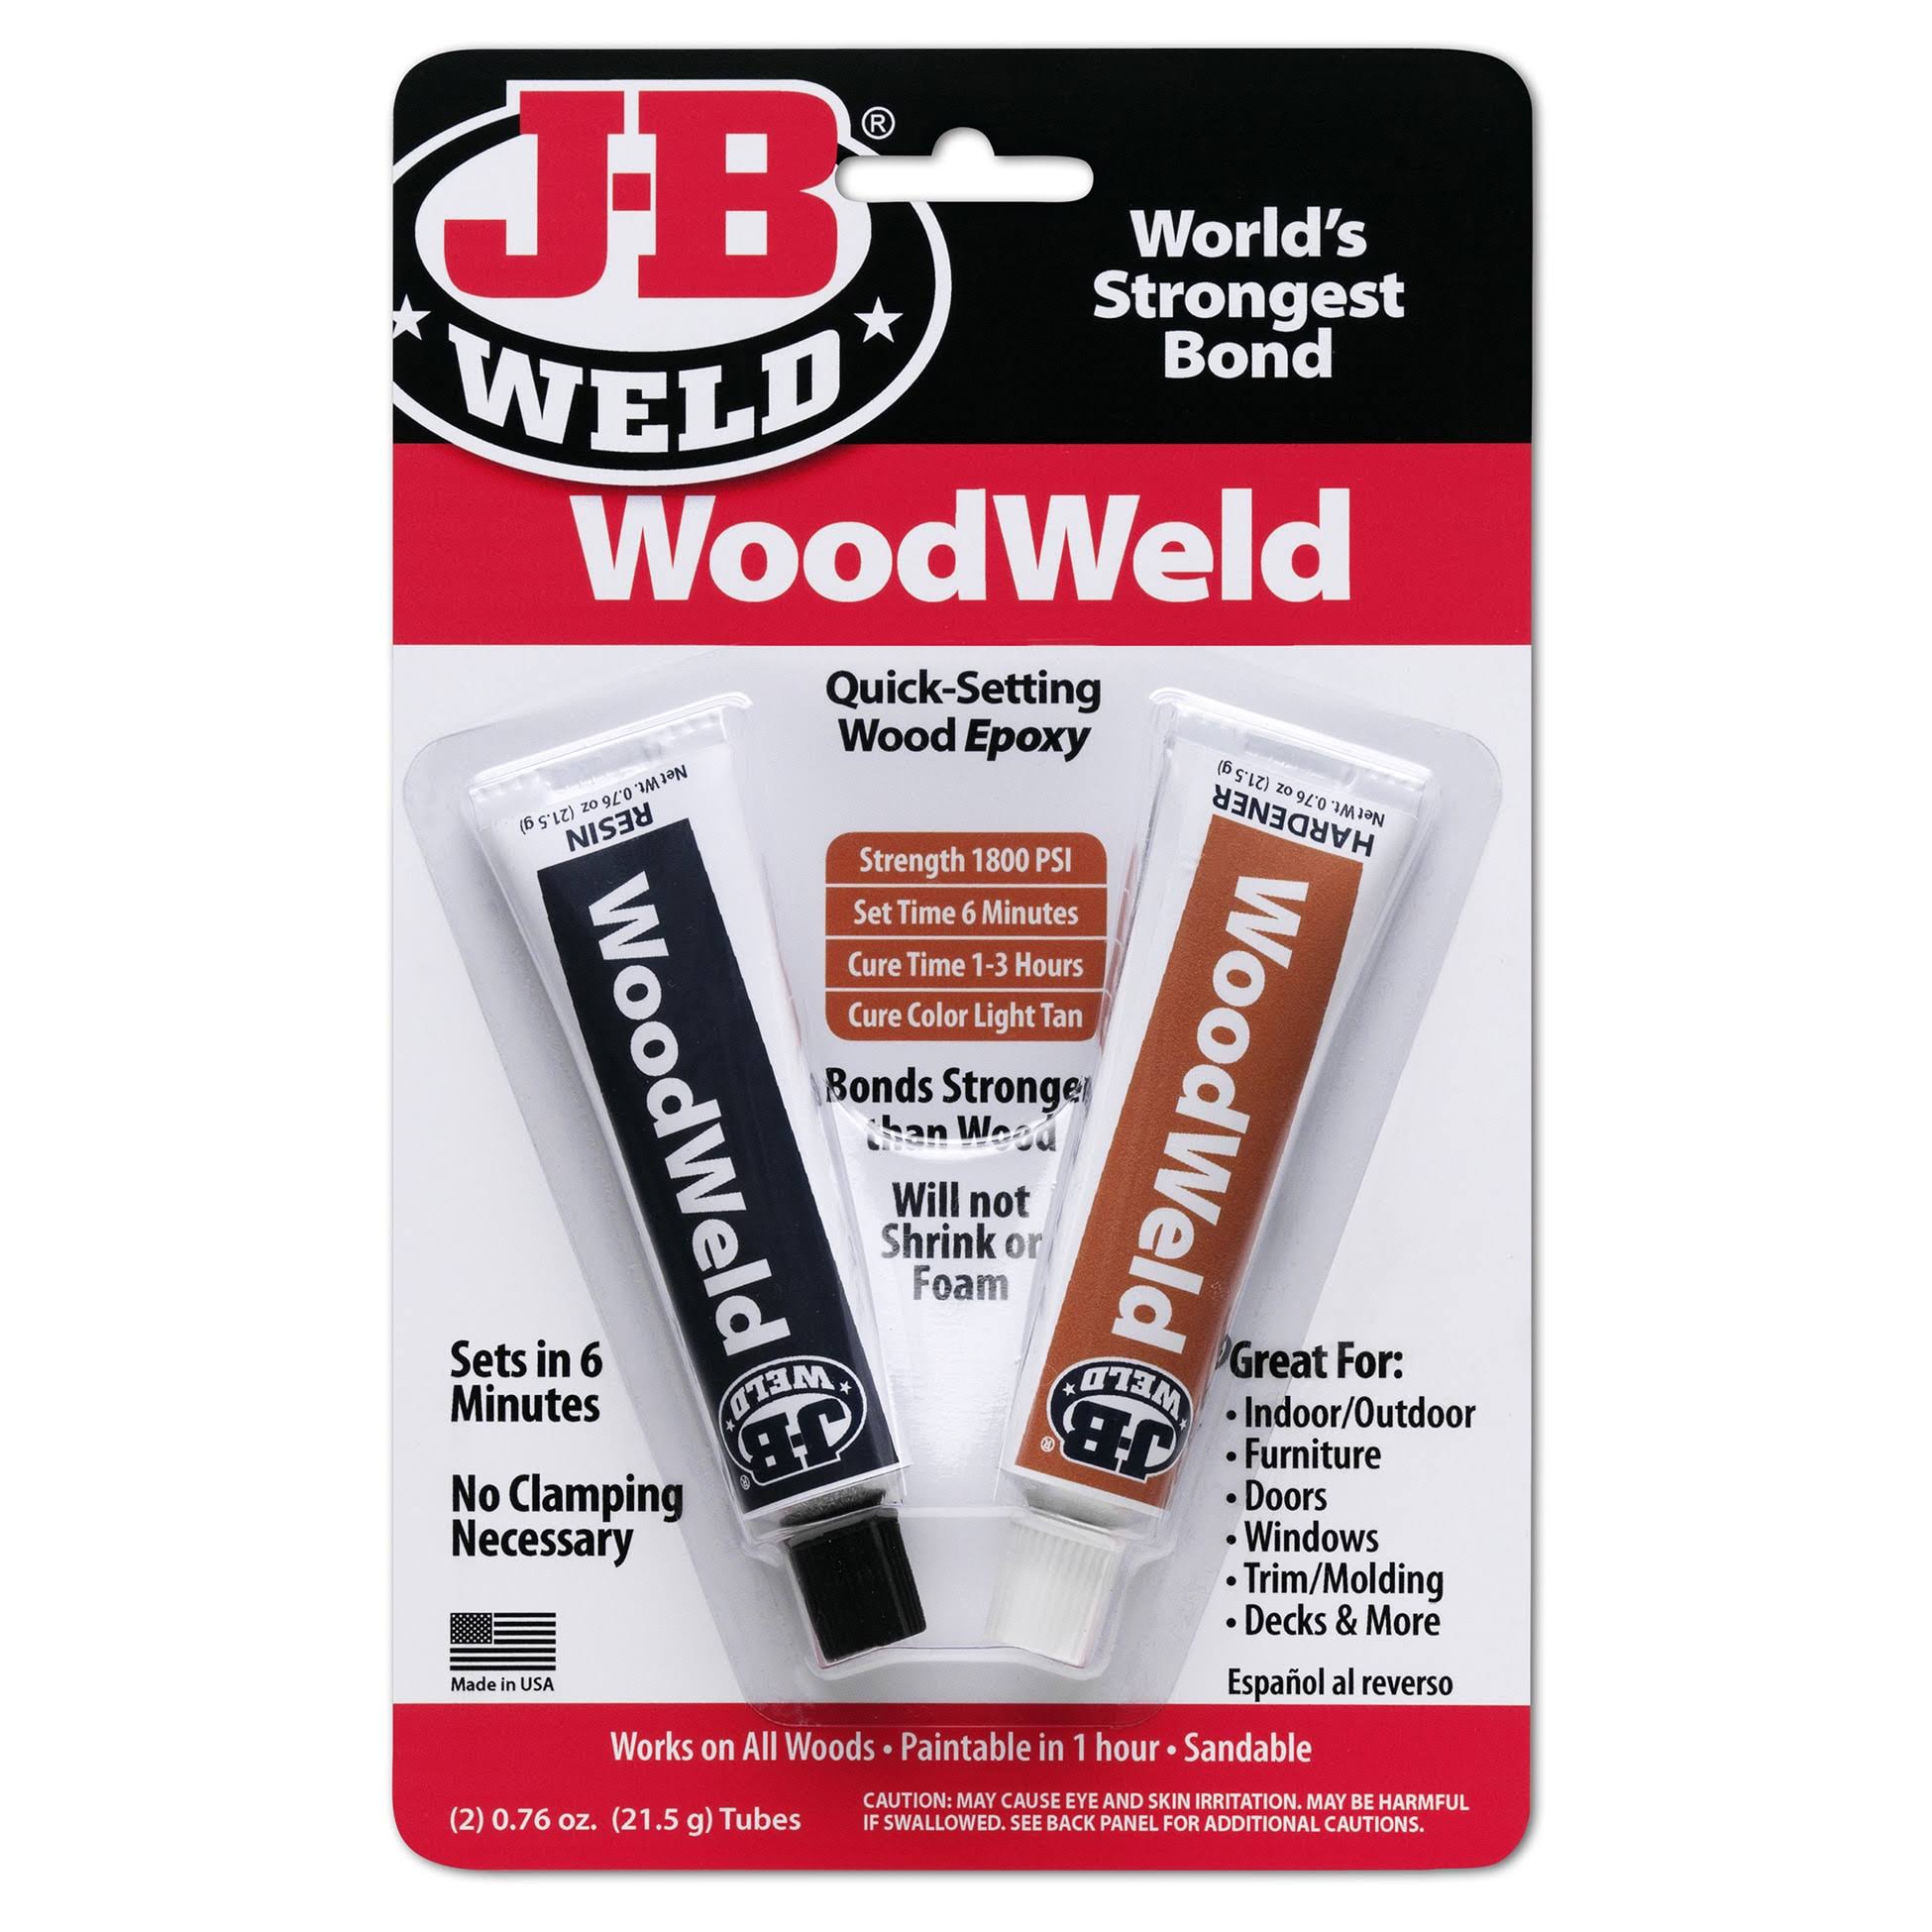 J-b Weld Woodweld Quick Setting Wood Epoxy Adhesive - 2 Tubes, 56.8g